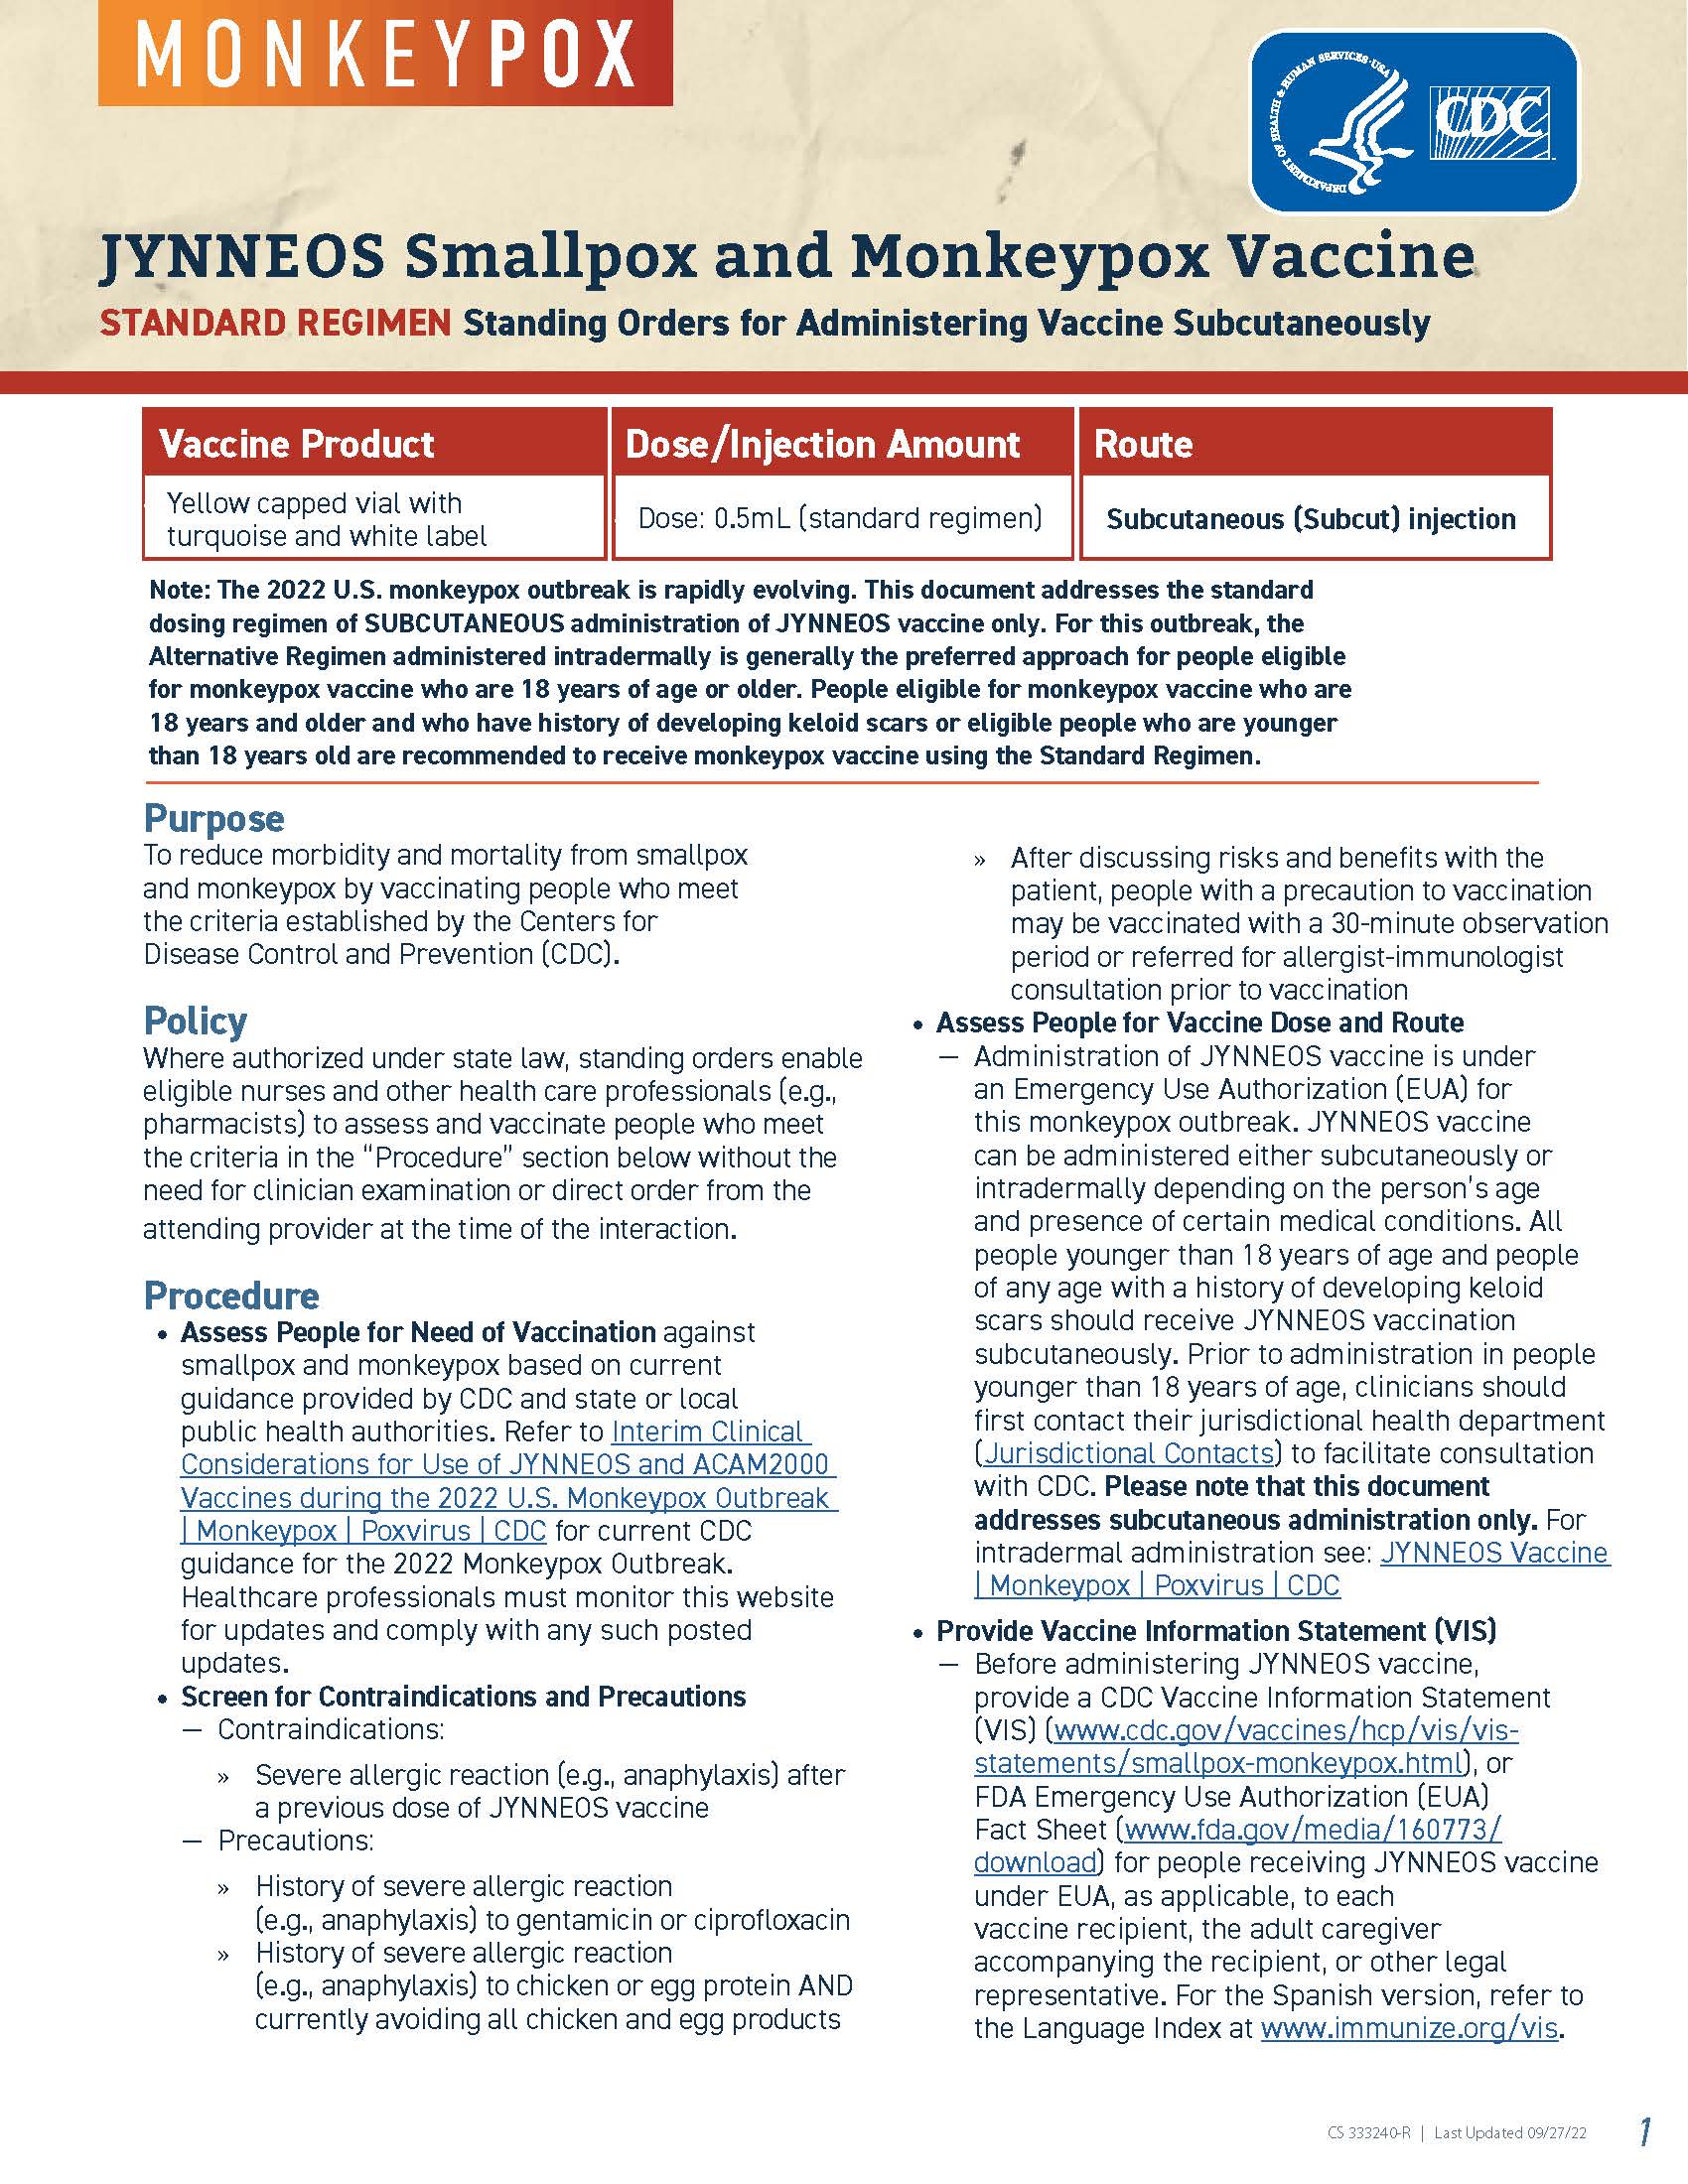 JYNNEOS Standing Orders (Standard Regimen), PDF thumbnail